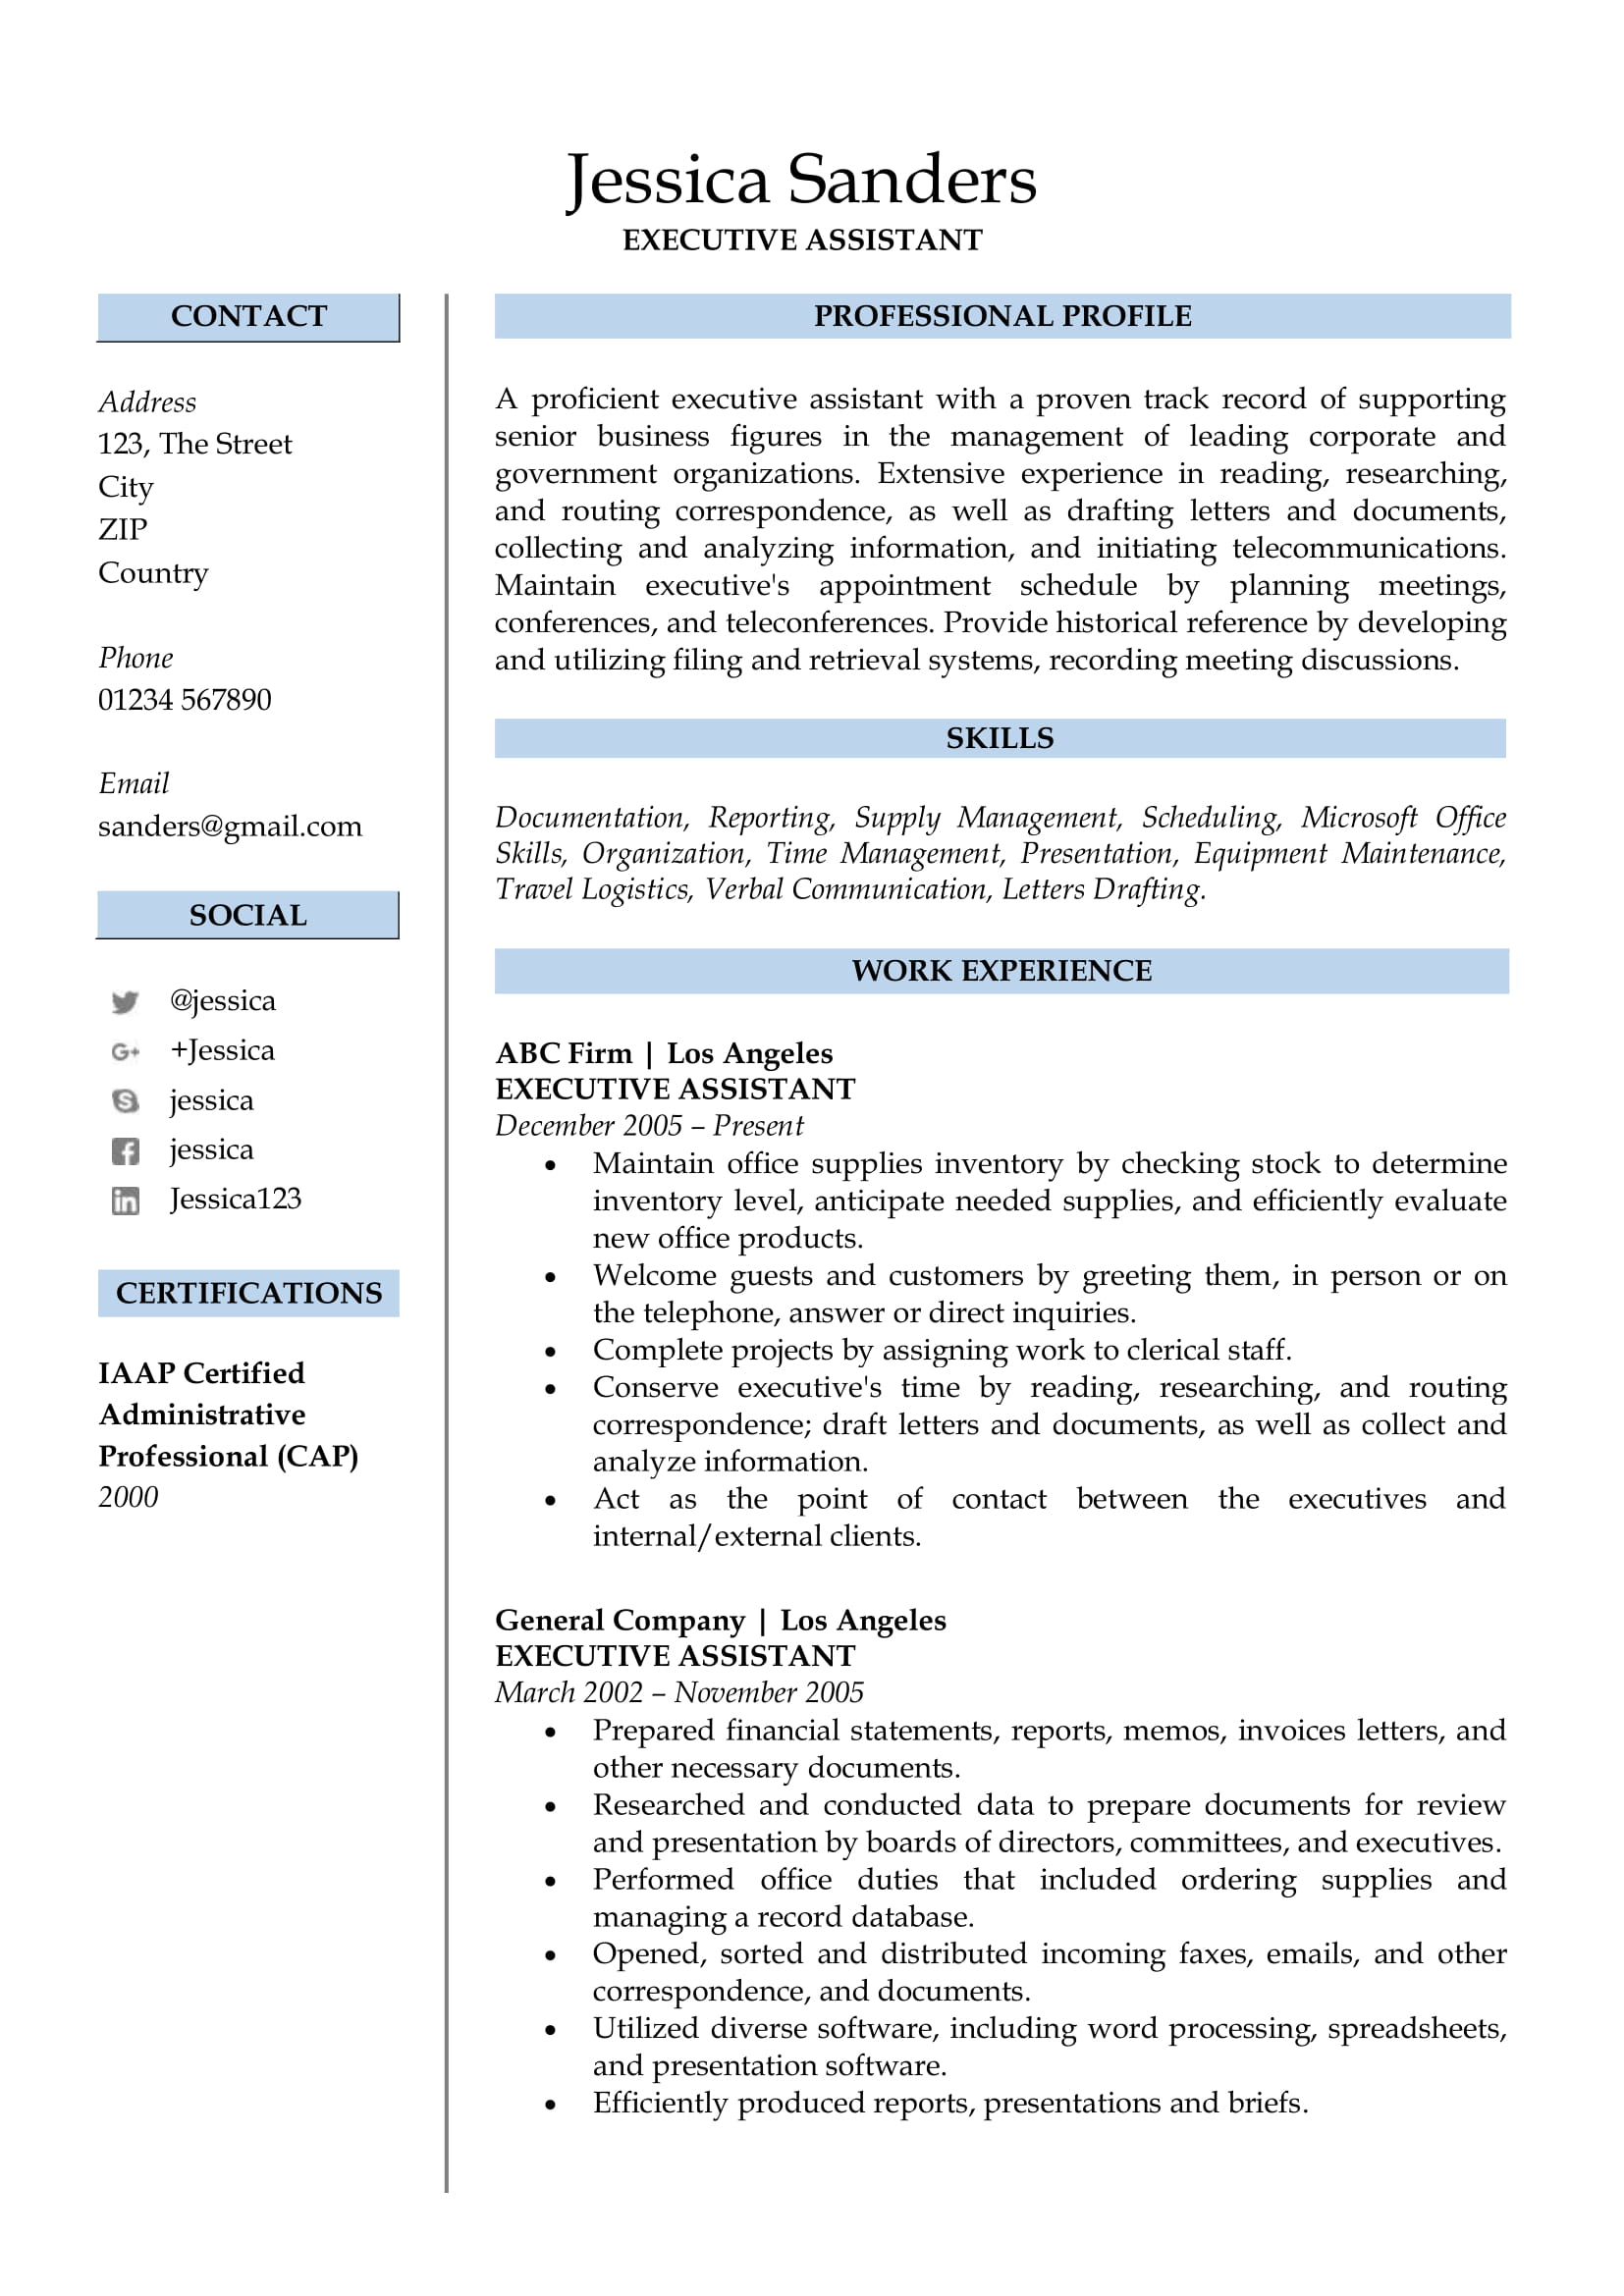 Free professional resume writing service